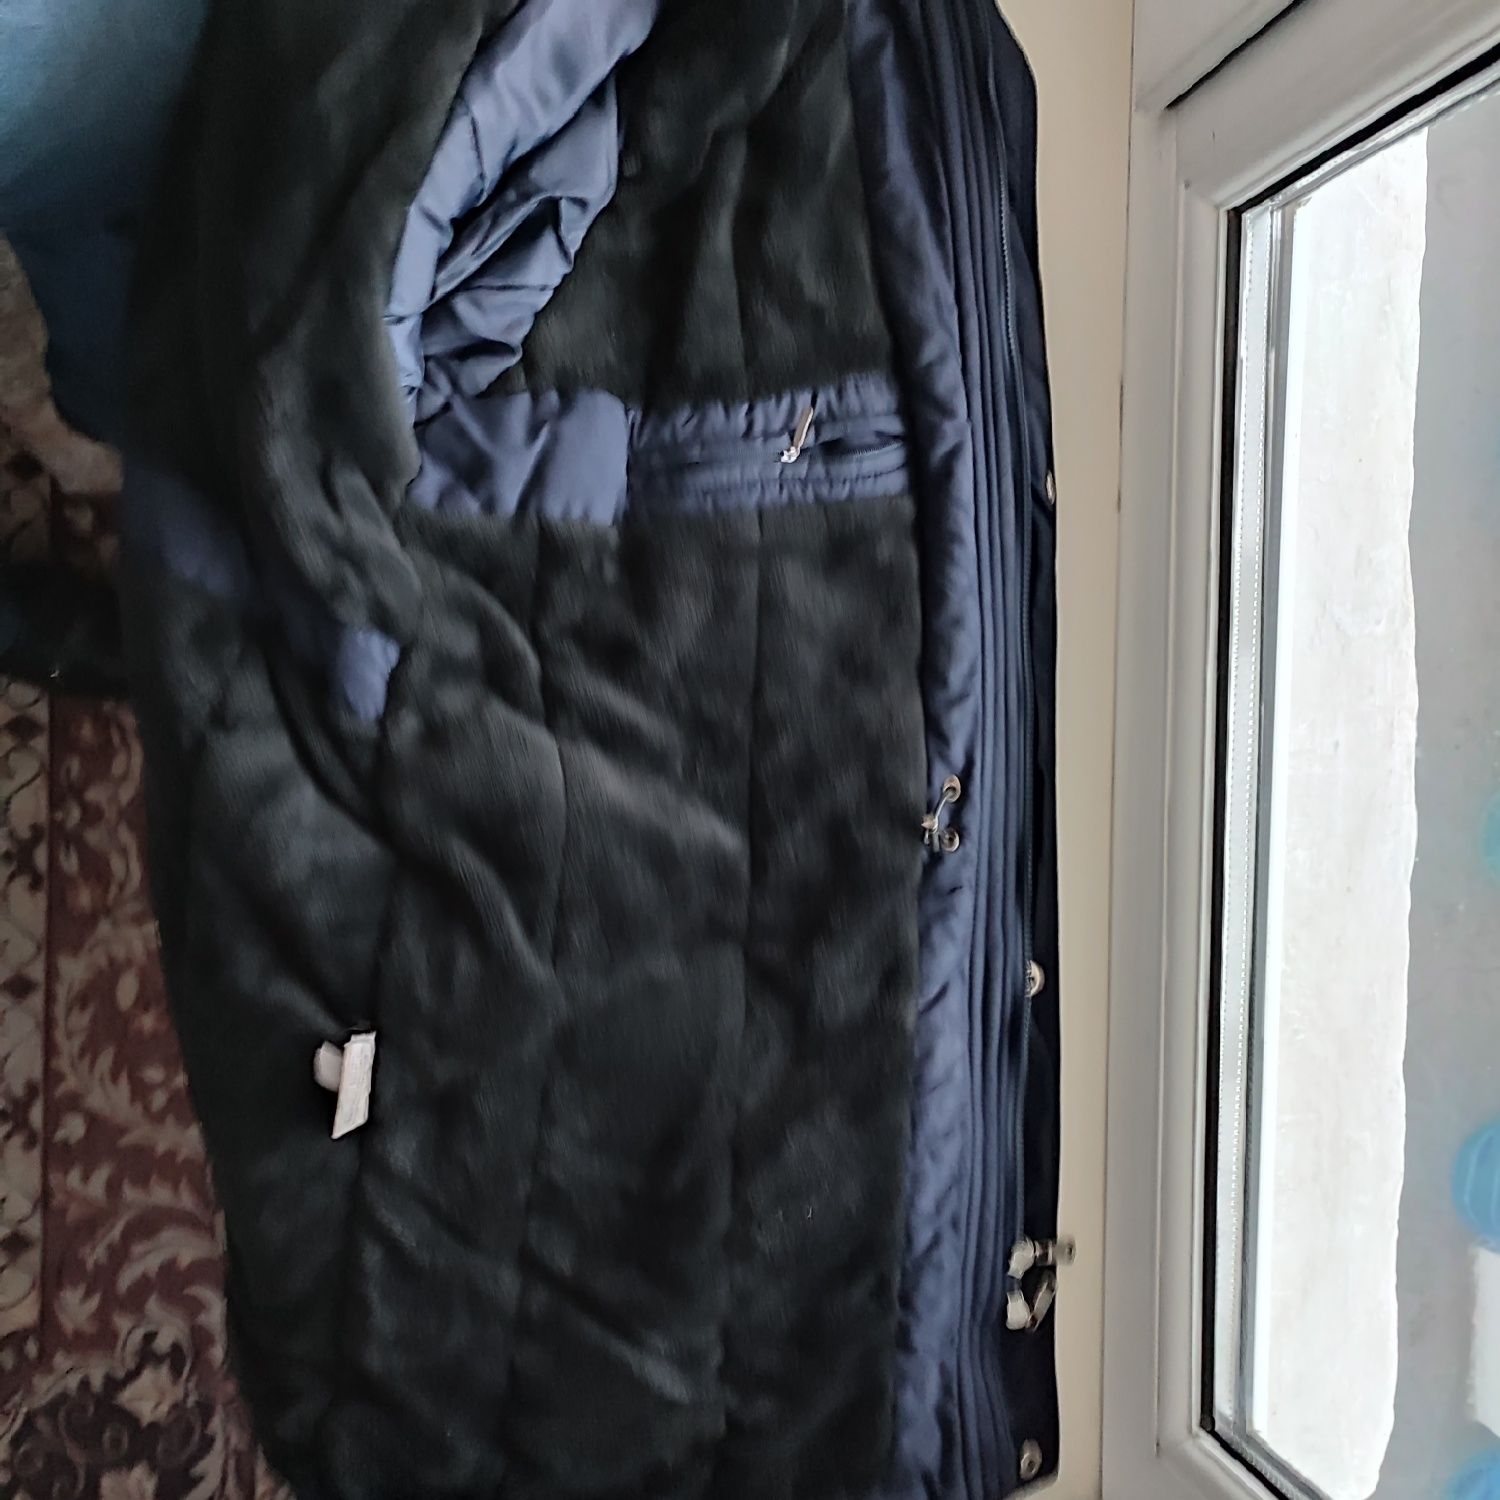 Куртка чоловіча утеплена розм. XXXL (52-54) виробн. VANZEER Туреччина